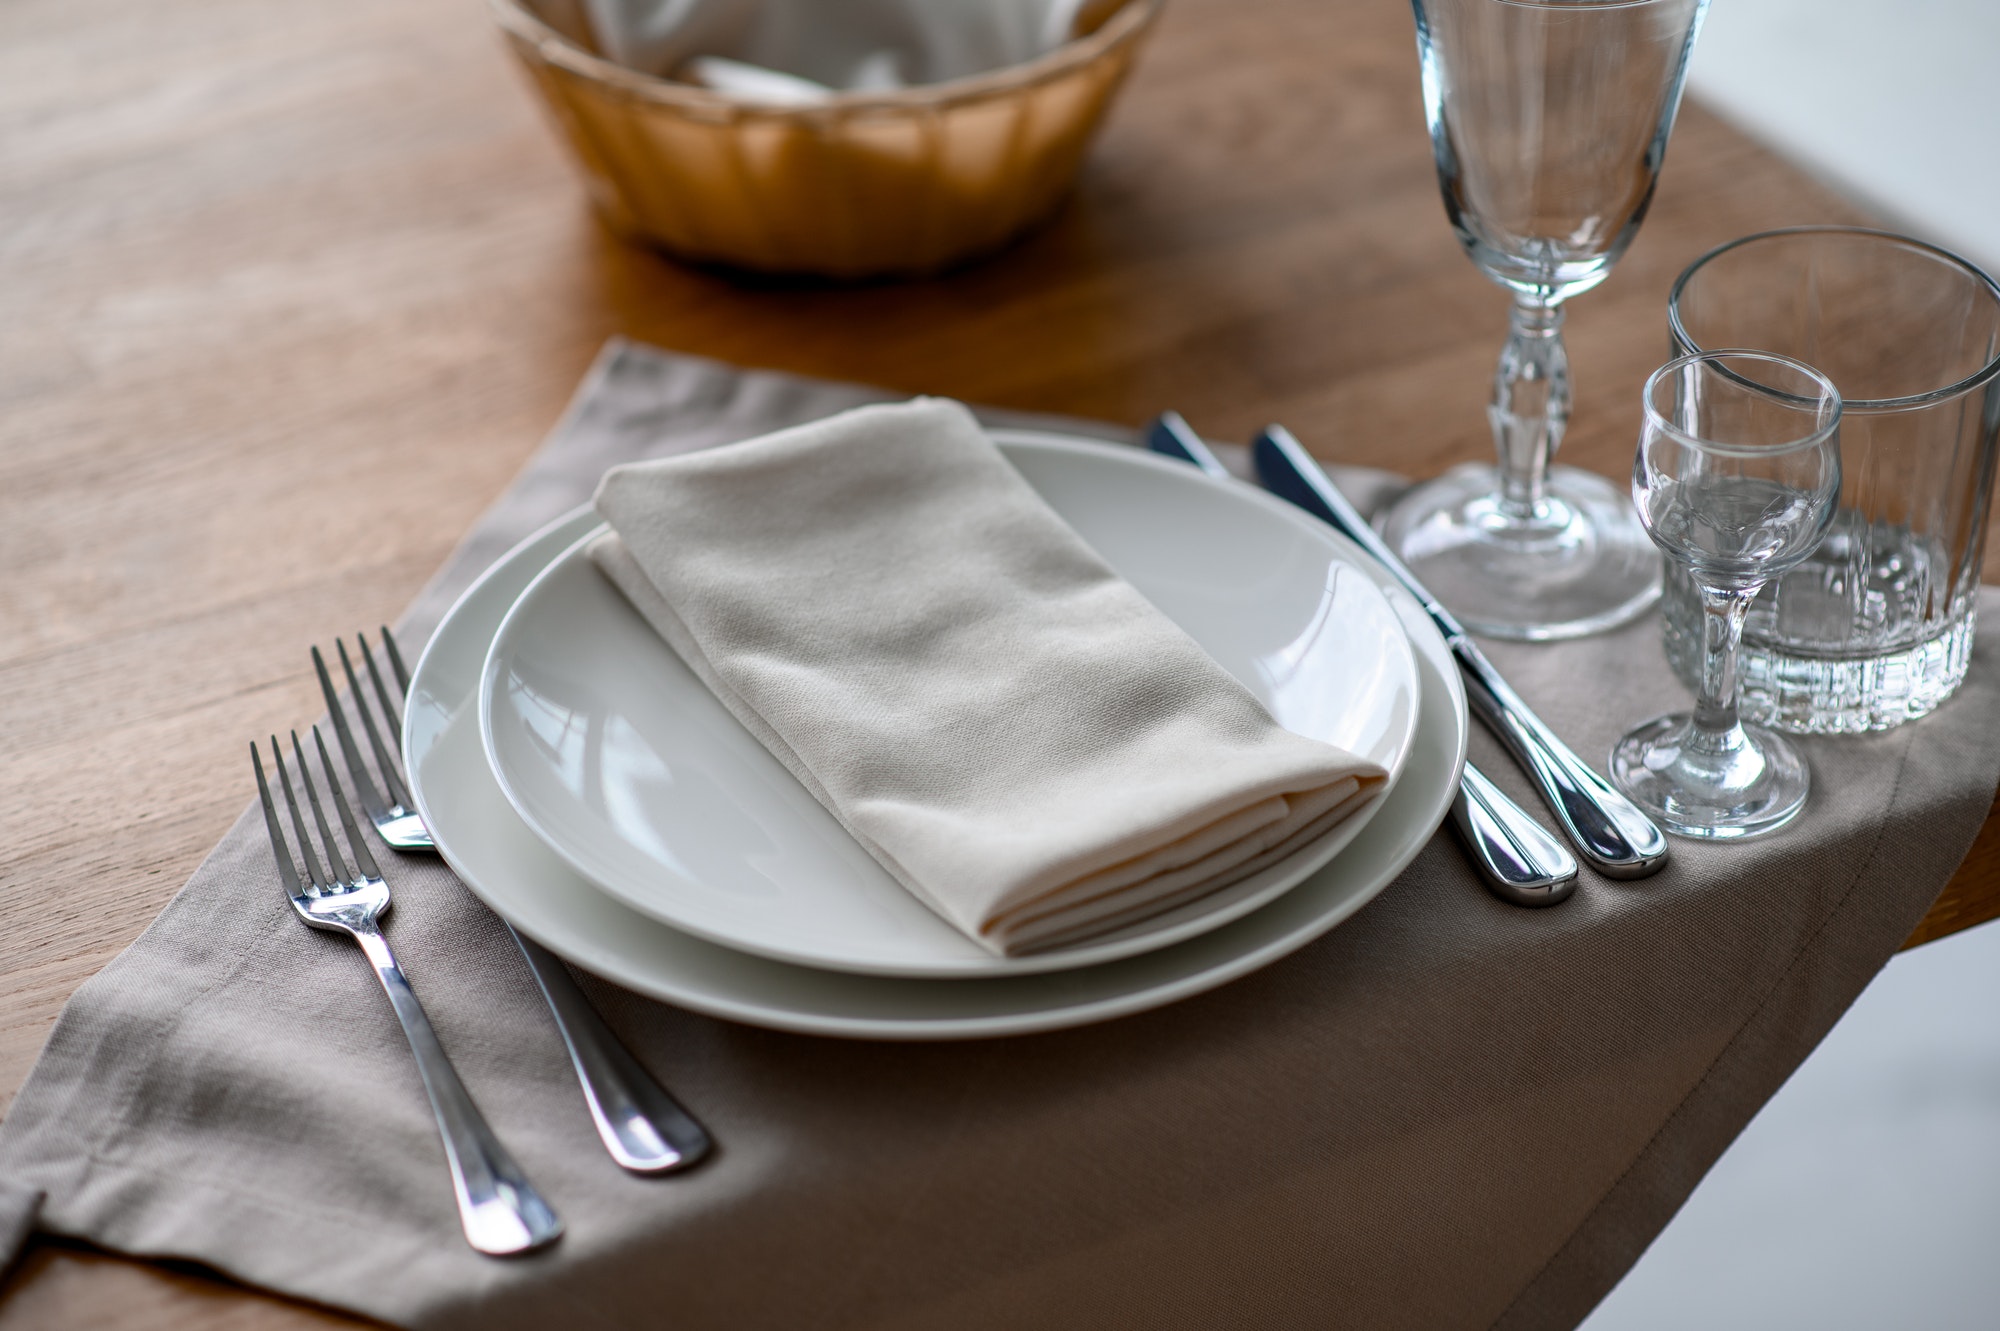 Festive romantic table setting with silverware, gray napkin and white crockery